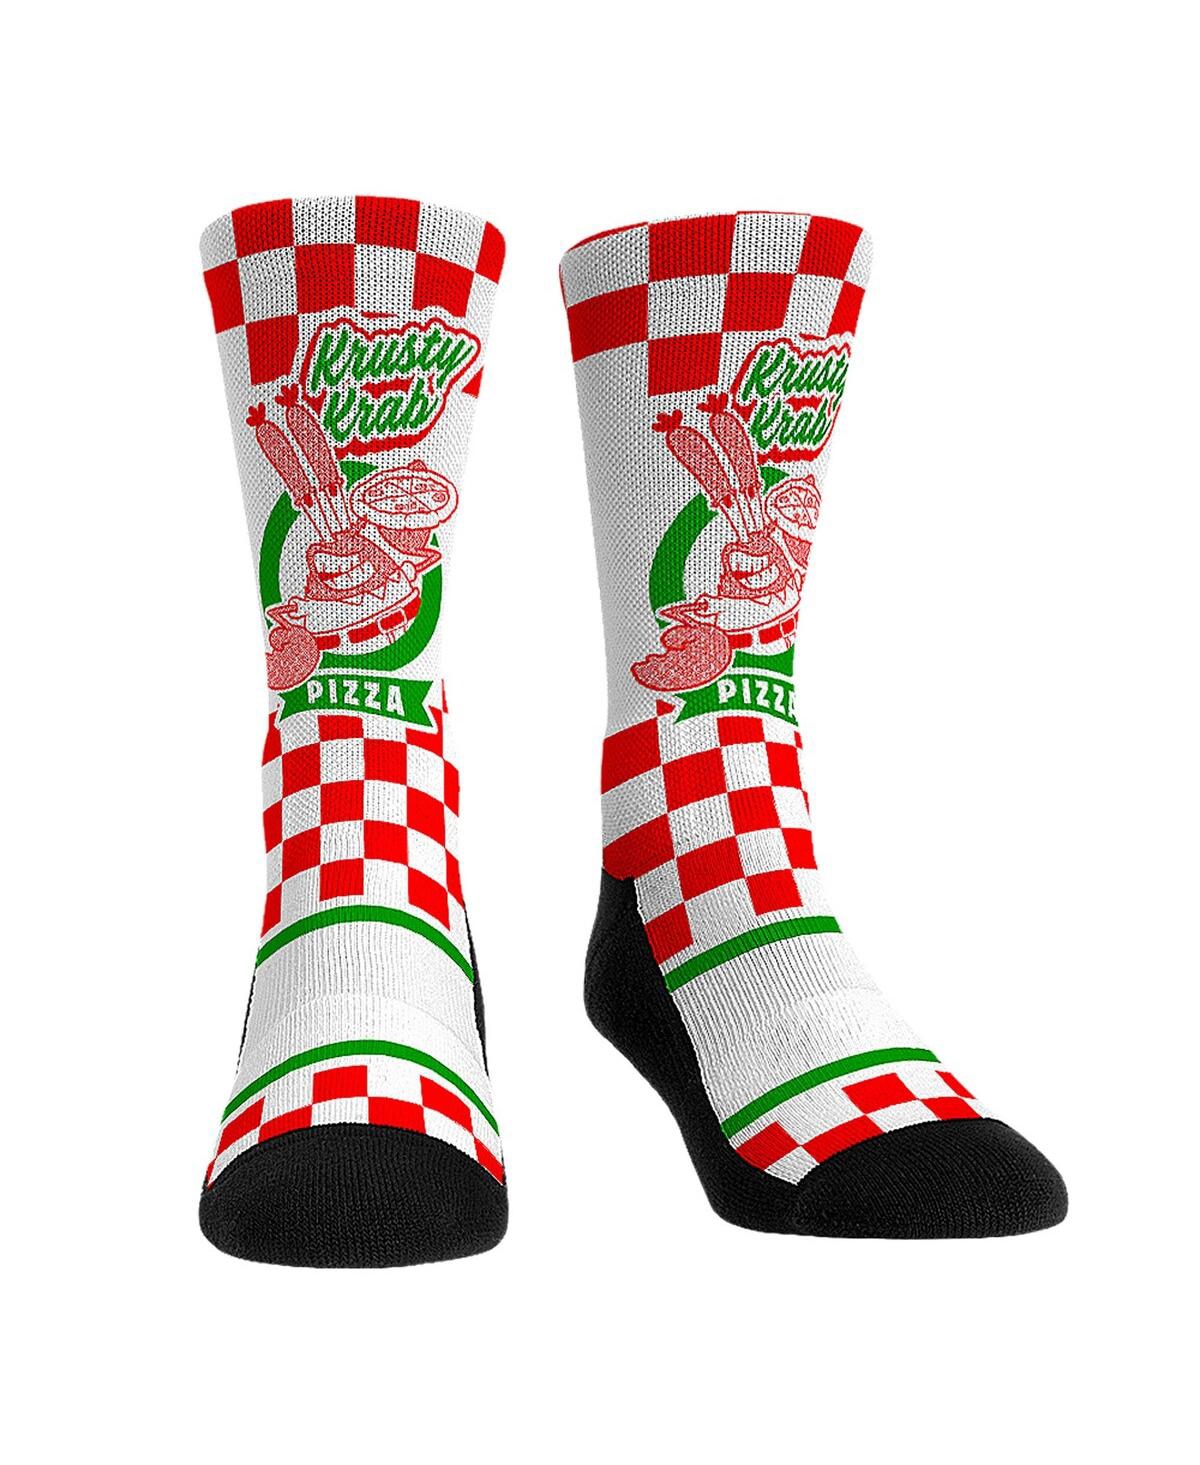 Shop Rock 'em Men's And Women's  Socks Spongebob Squarepants Krusty Krab Pizza Crew Socks In Multi